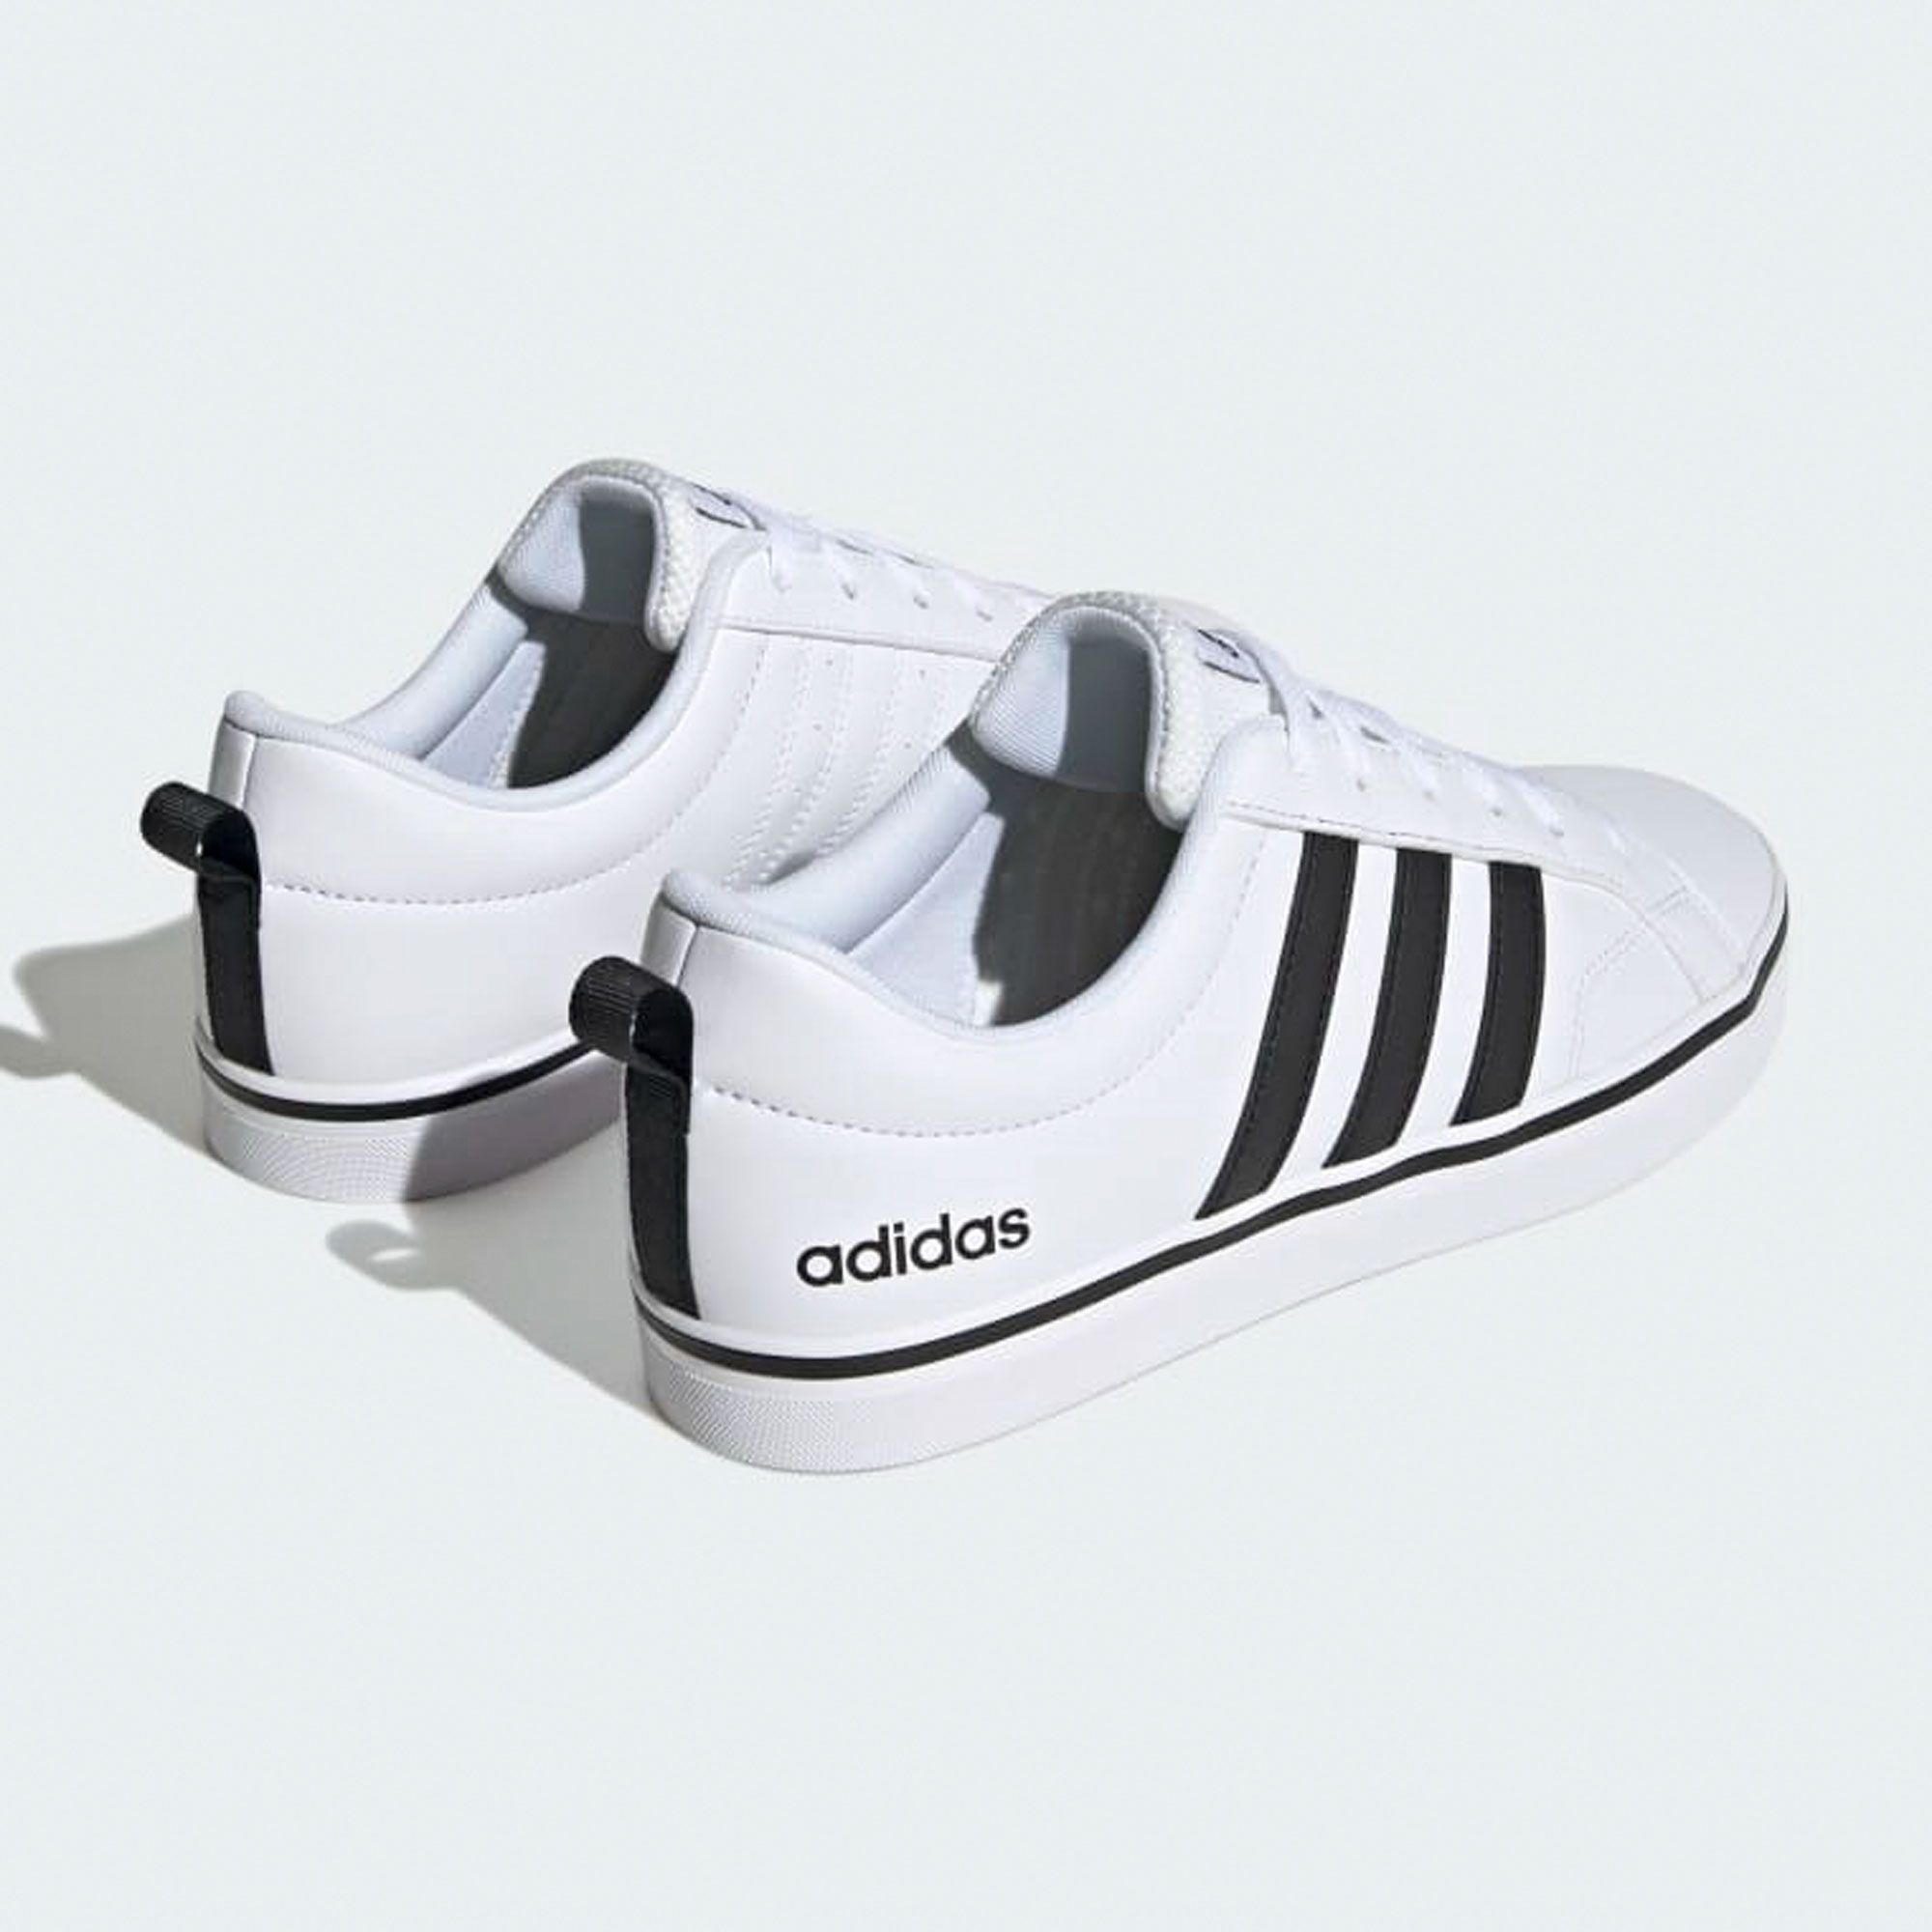 Scarpe uomo Adidas VS PACE sneakers basse sportive casual tennis palestra  scuola | eBay